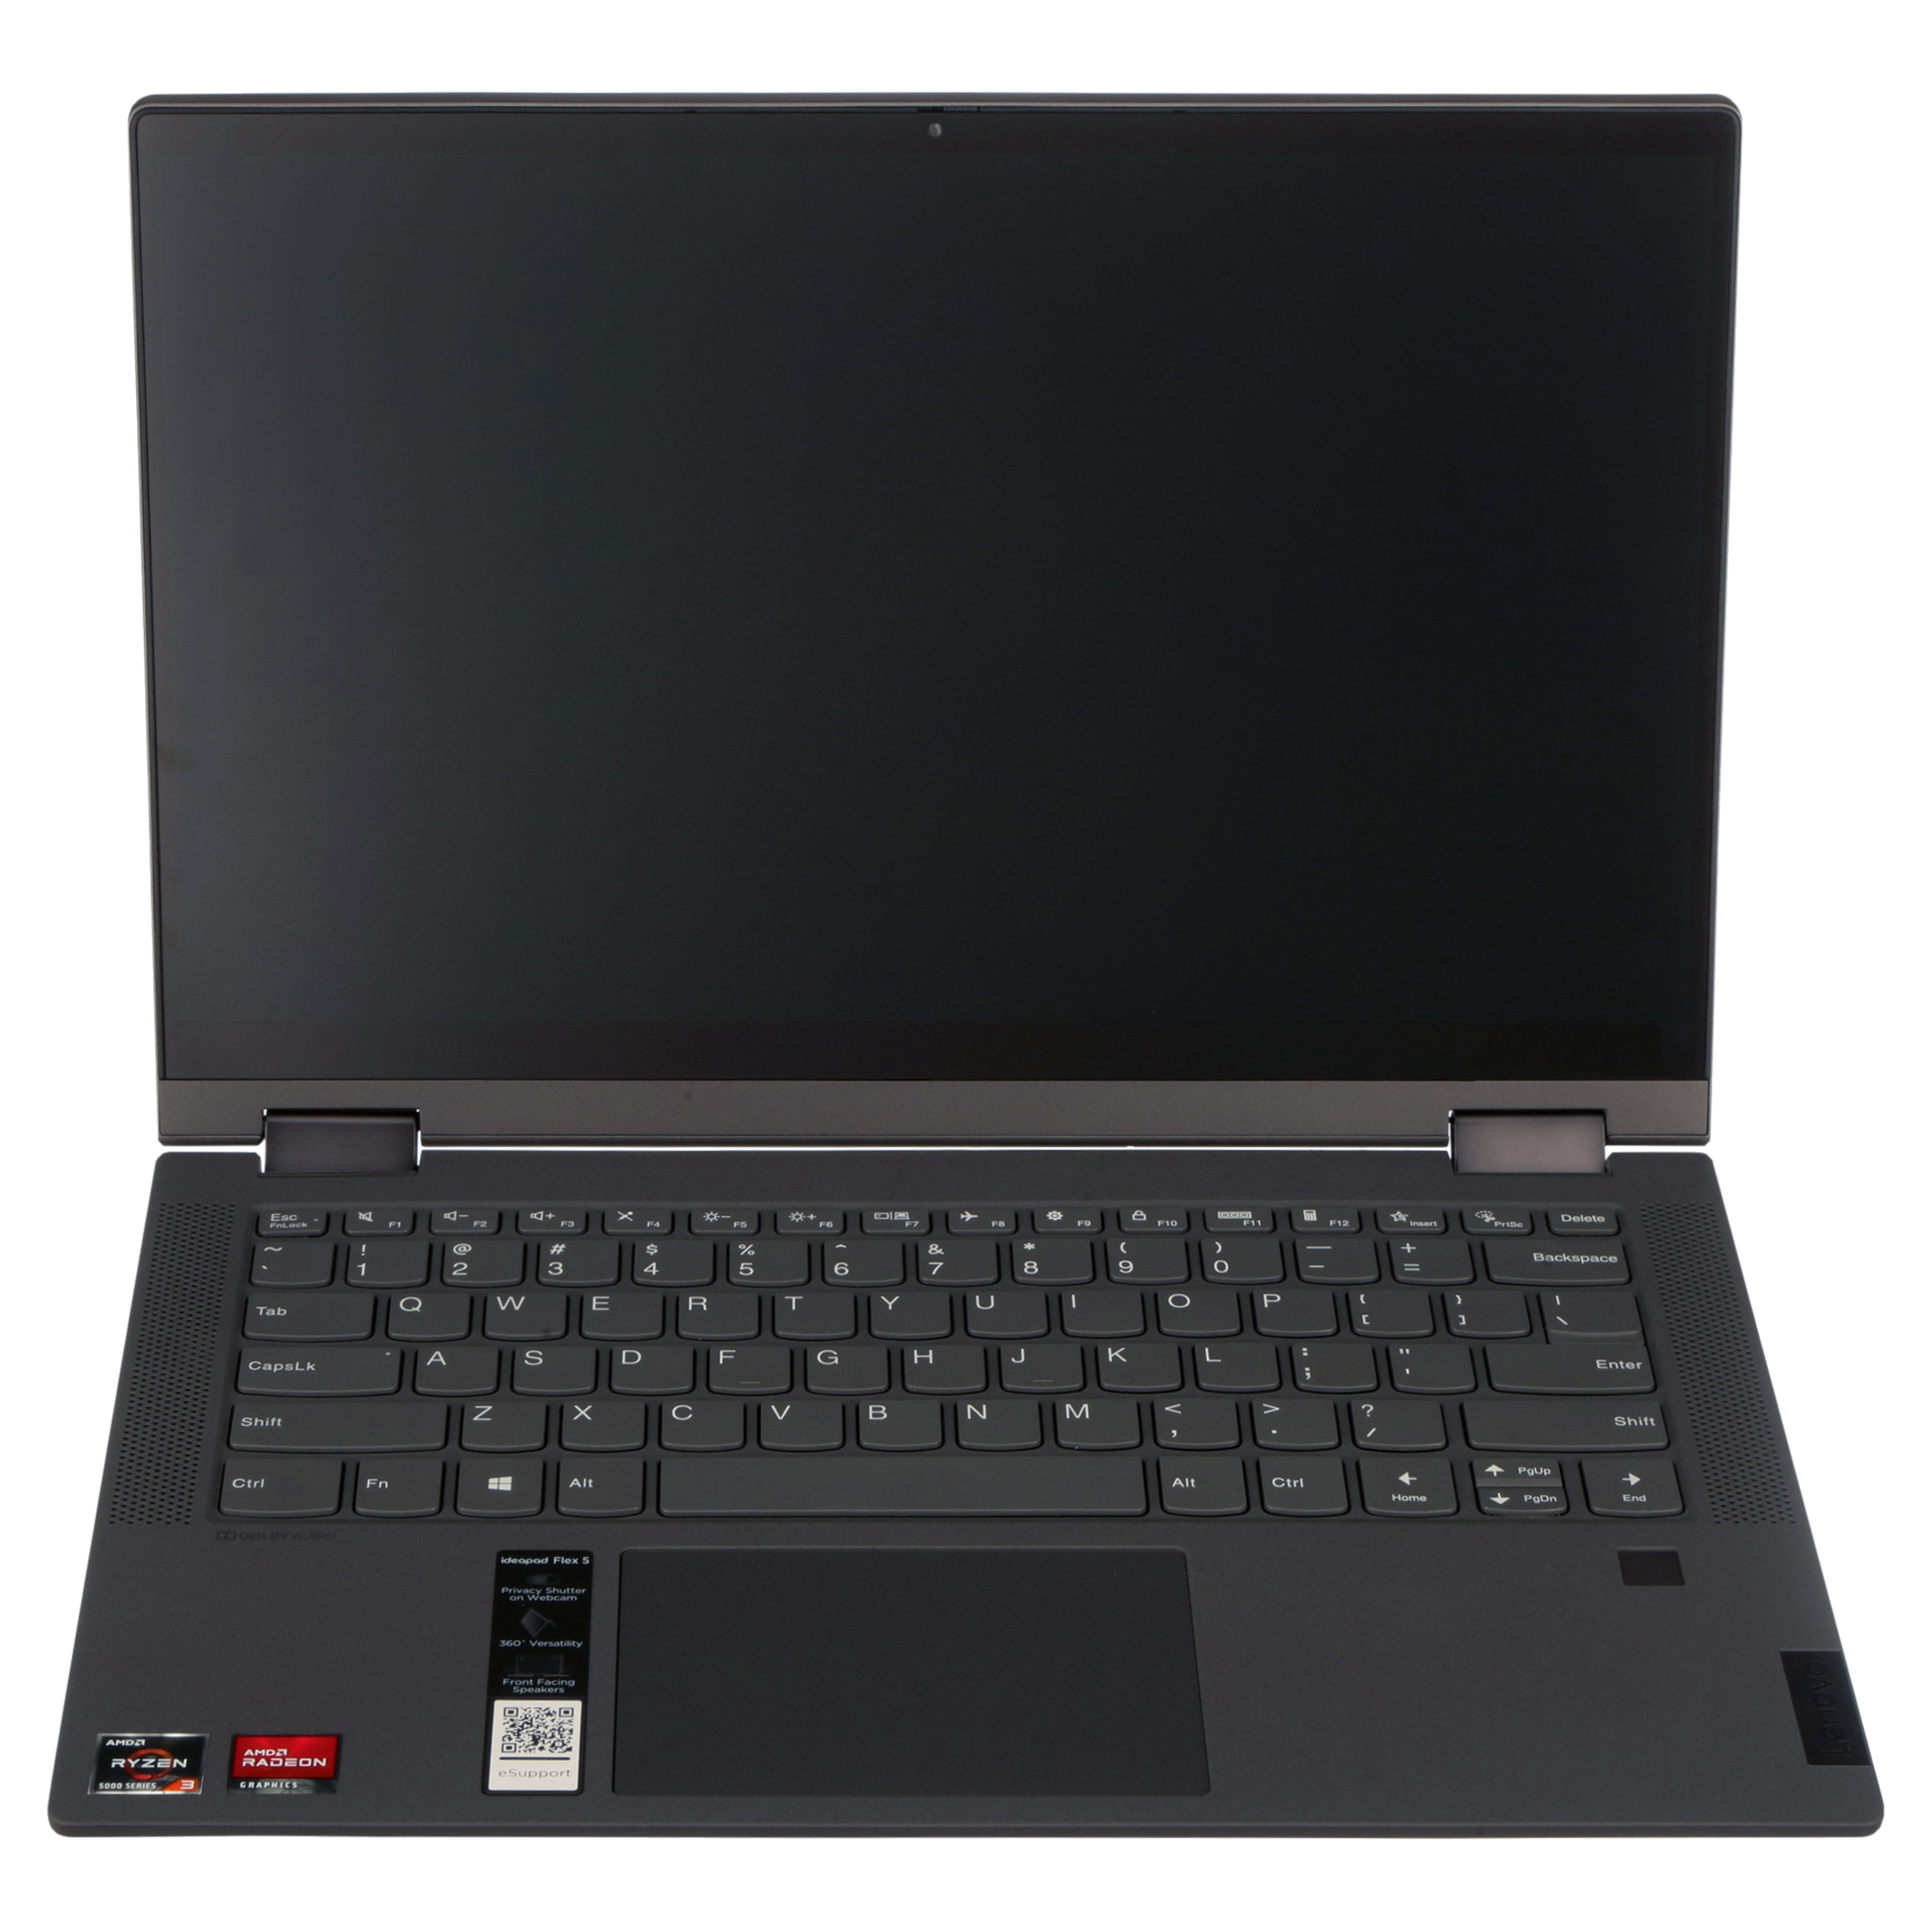 Lenovo Ideapad Flex 5 14" FHD 2-in-1 Touchscreen Laptop, AMD Ryzen 3, 4GB RAM, 128GB SSD, Graphite Gray, Windows 10, 82HU003JUS - image 3 of 21